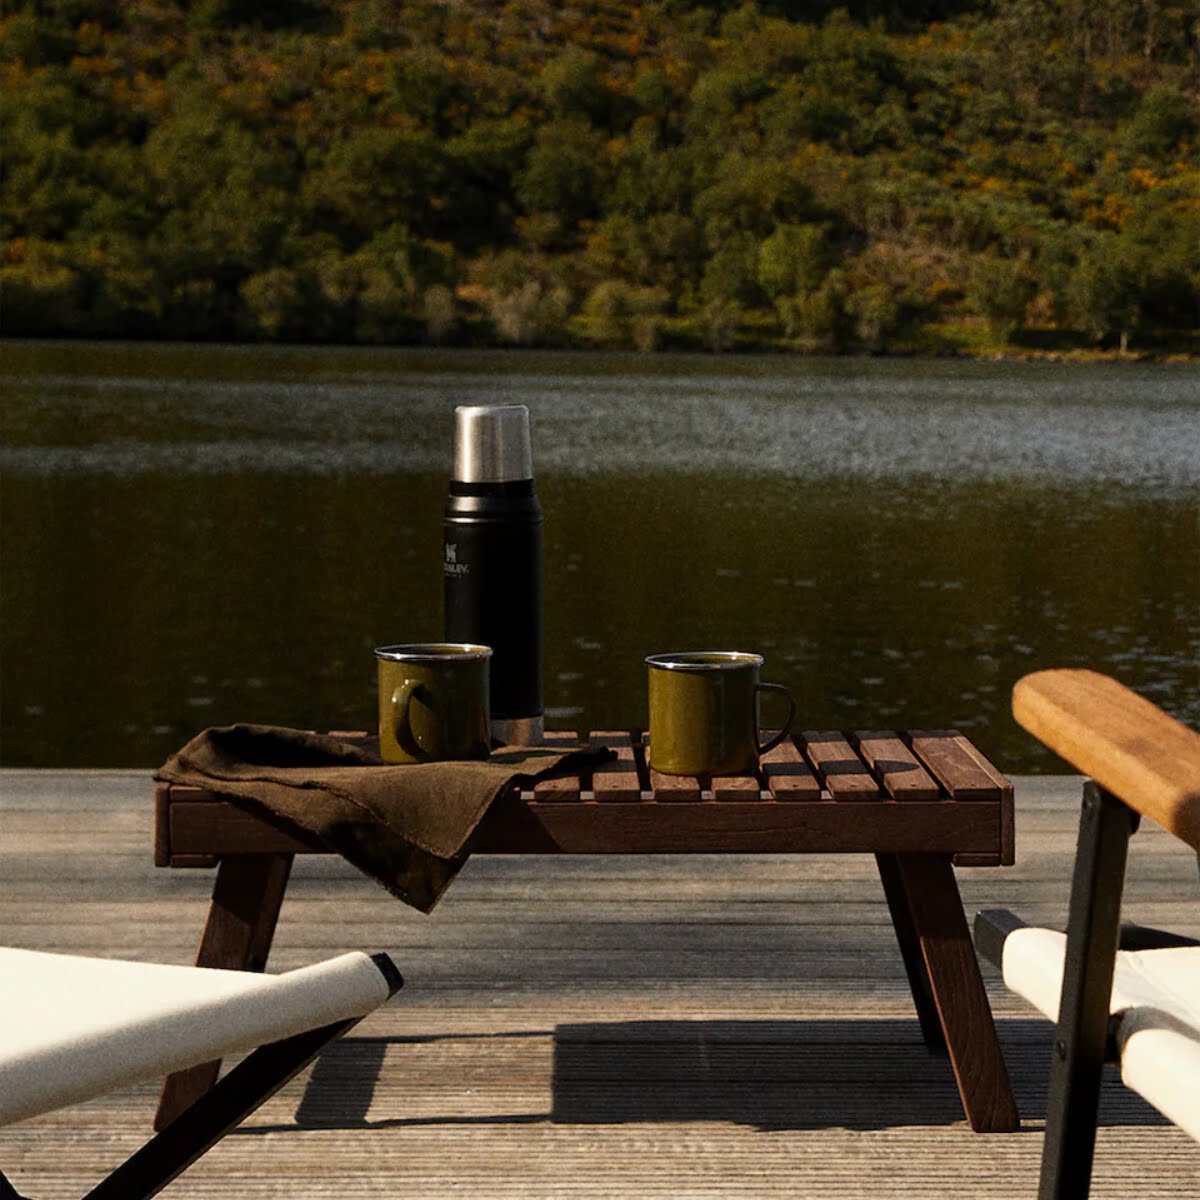 Zara Home Camping Outdoor Wooden Table, €69.99